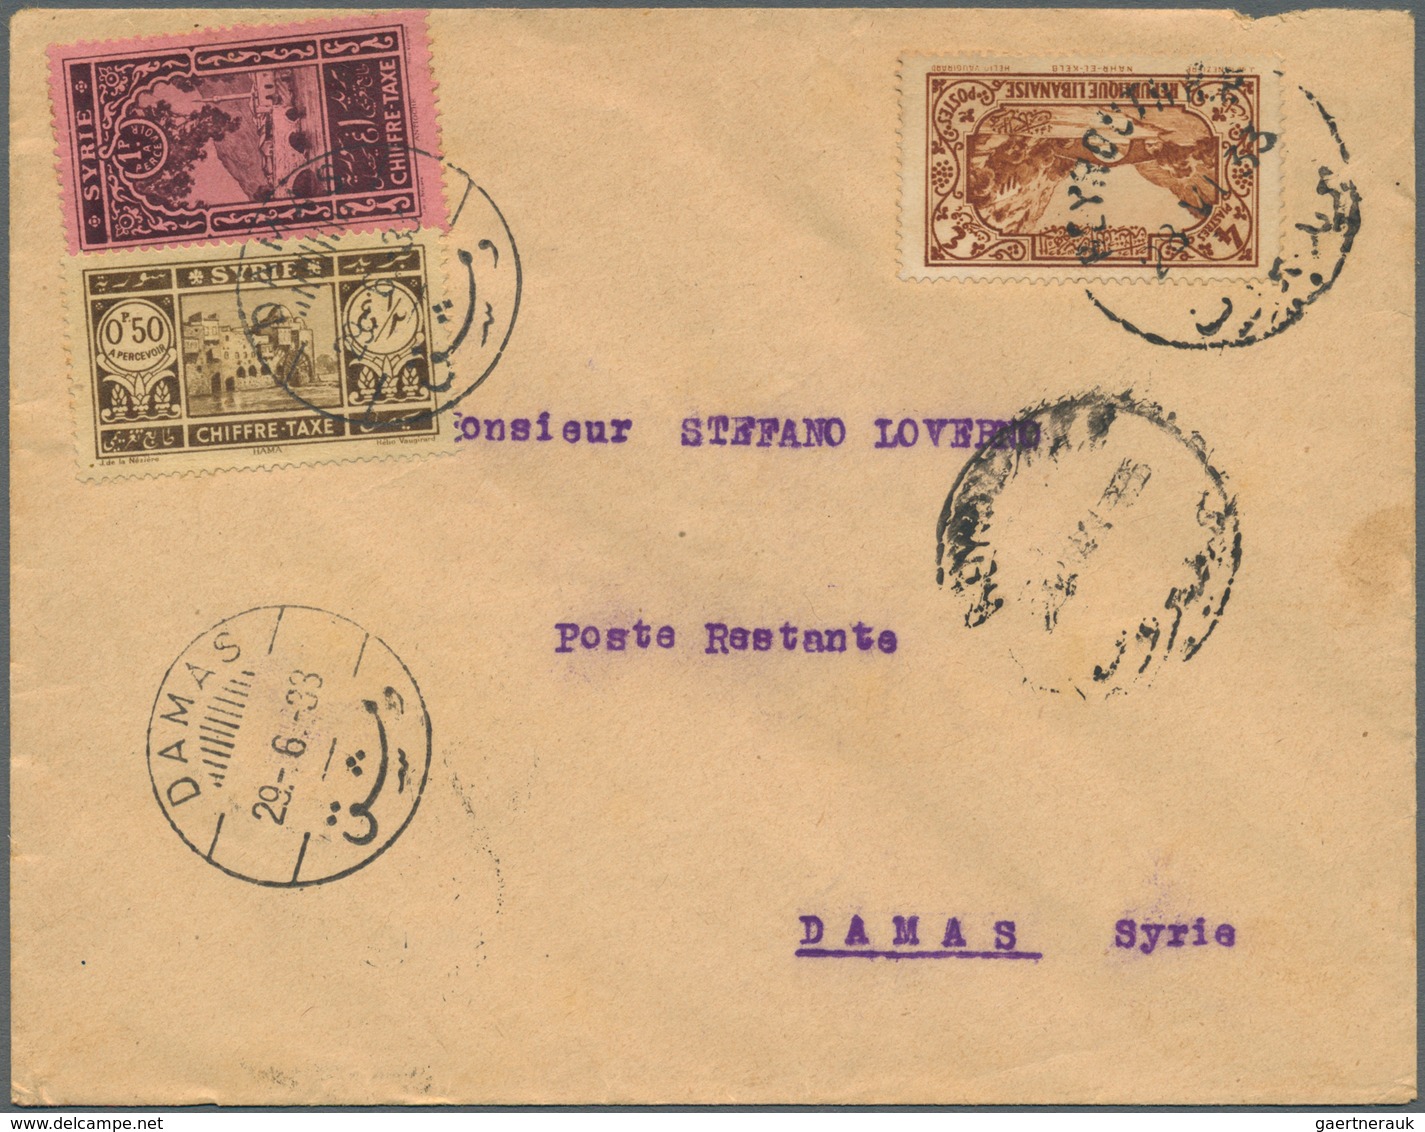 Französische Kolonien / Nachfolgestaaten: 1871/1944: 87 better covers and postal stationeries includ